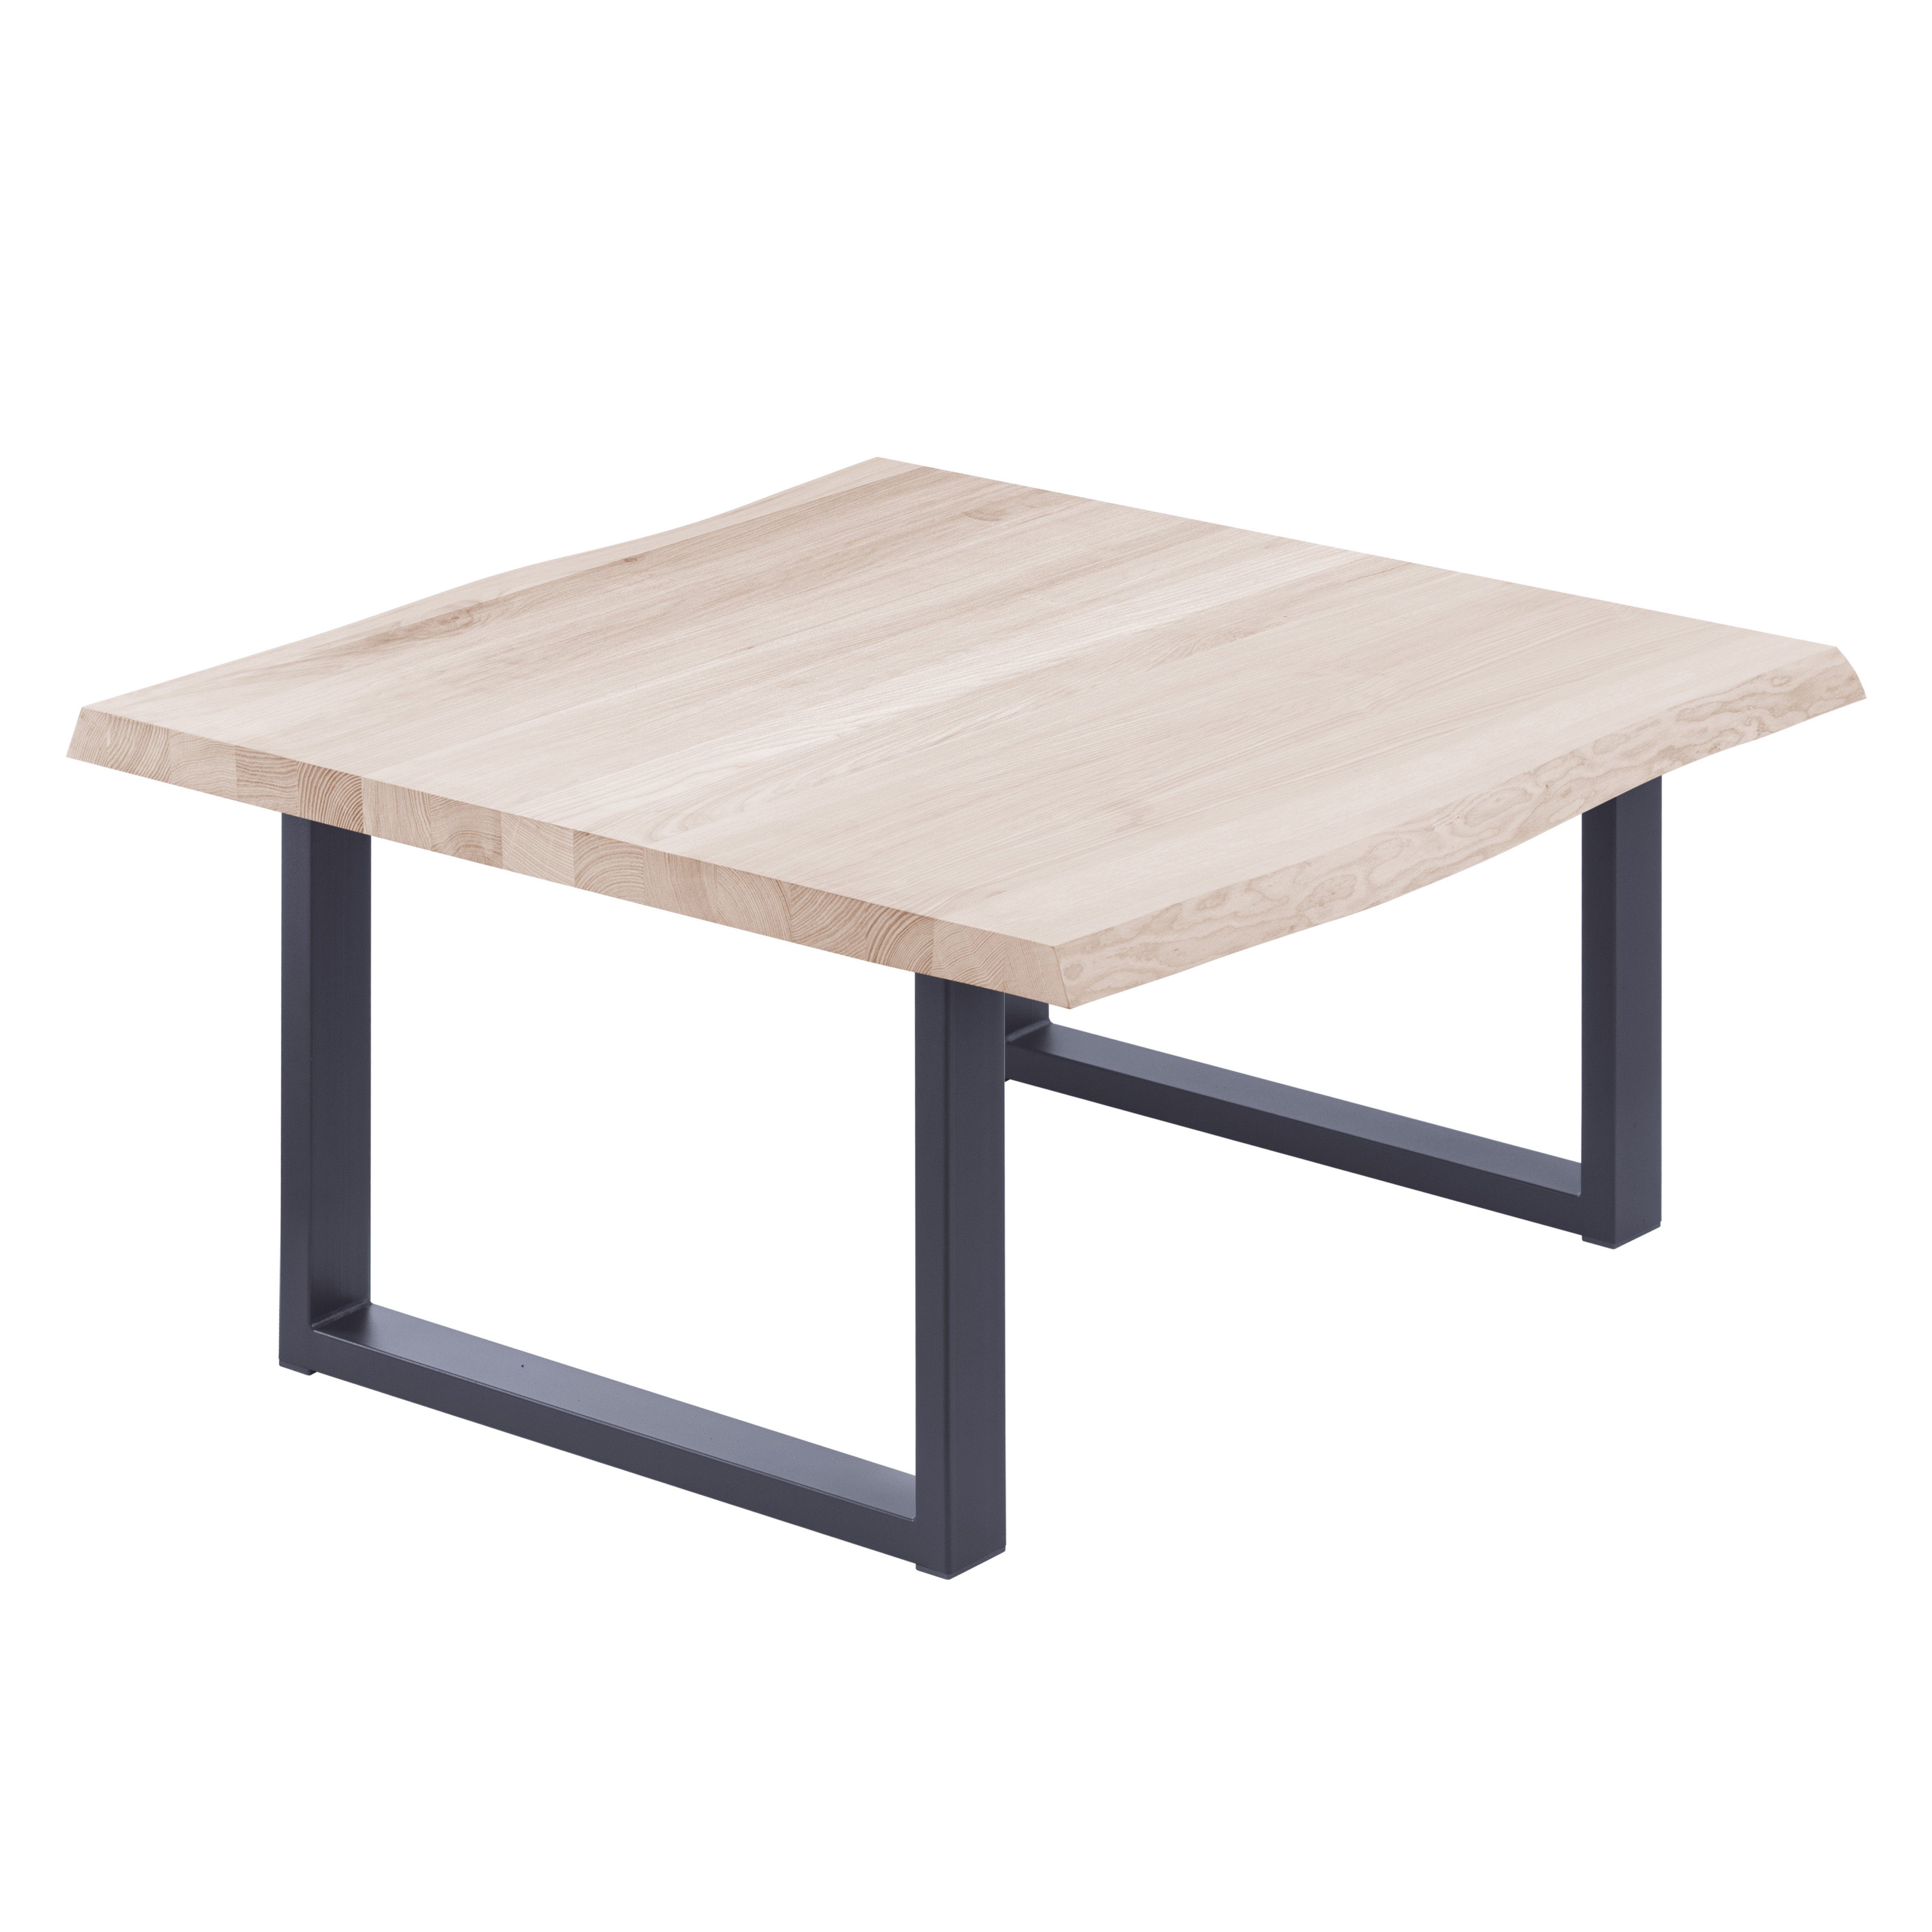 LAMO Manufaktur Baumkantentisch Loft Esstisch Massivholz inkl. Metallgestell (1 Tisch), Baumkante massiv